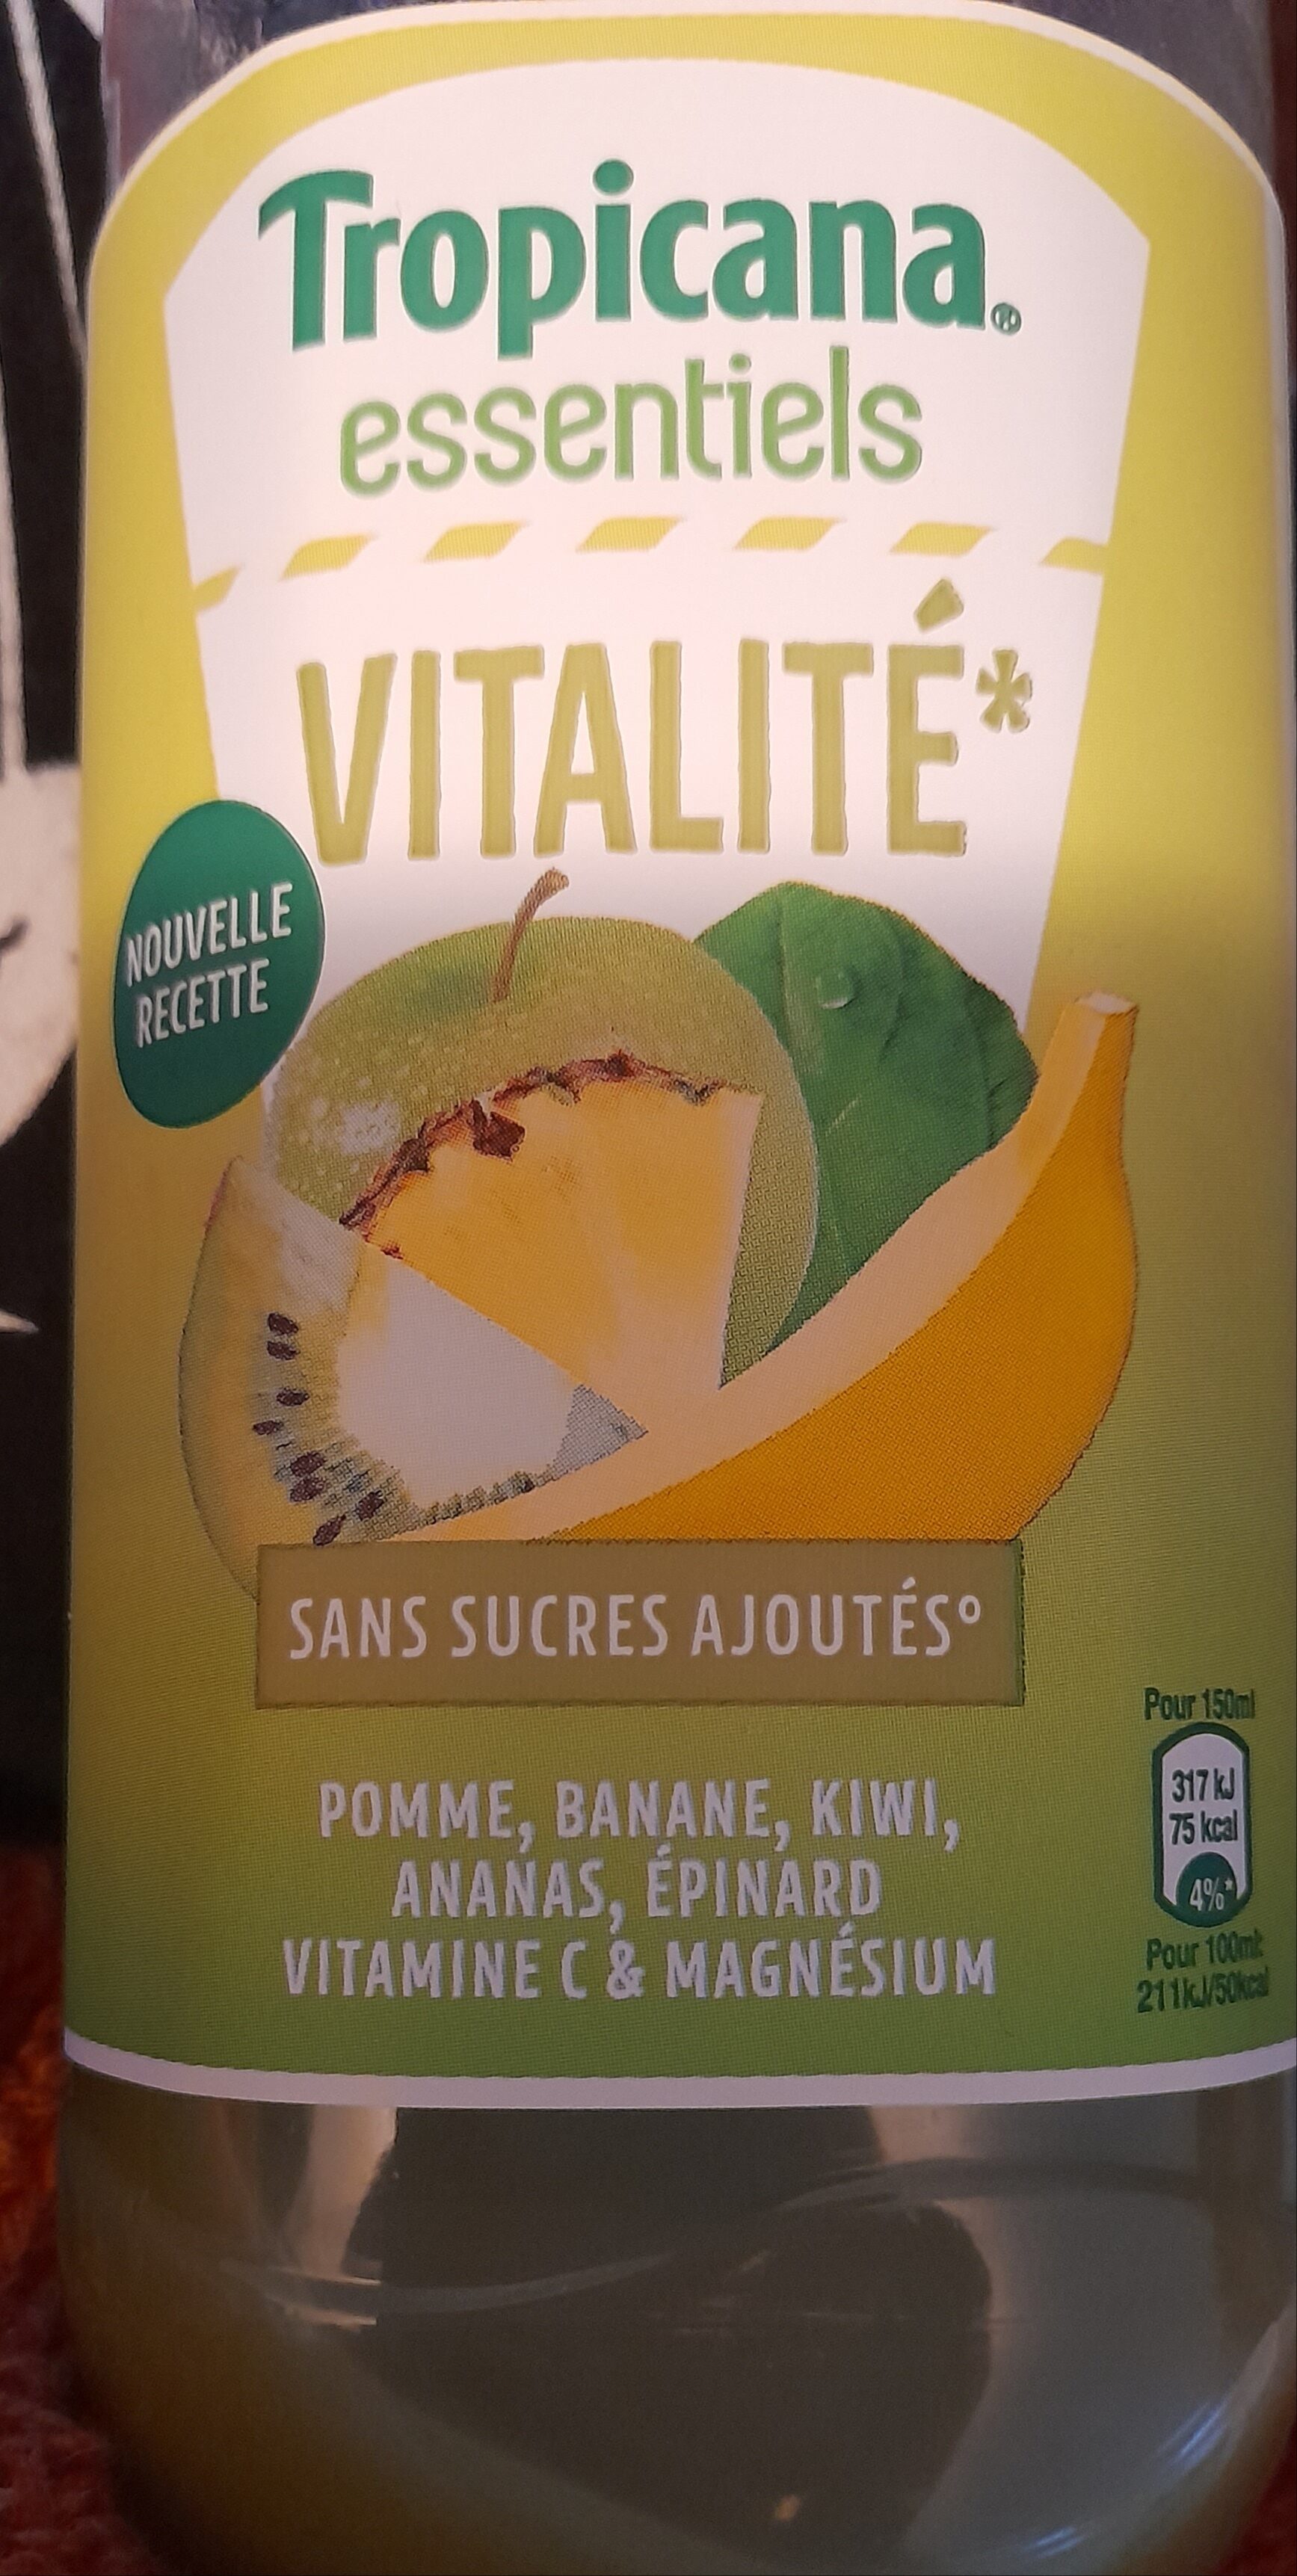 Tropicana Essentiels Vitalité pomme, banane, kiwi, ananas, épinard vitamine C & magnésium 1 L - Produit